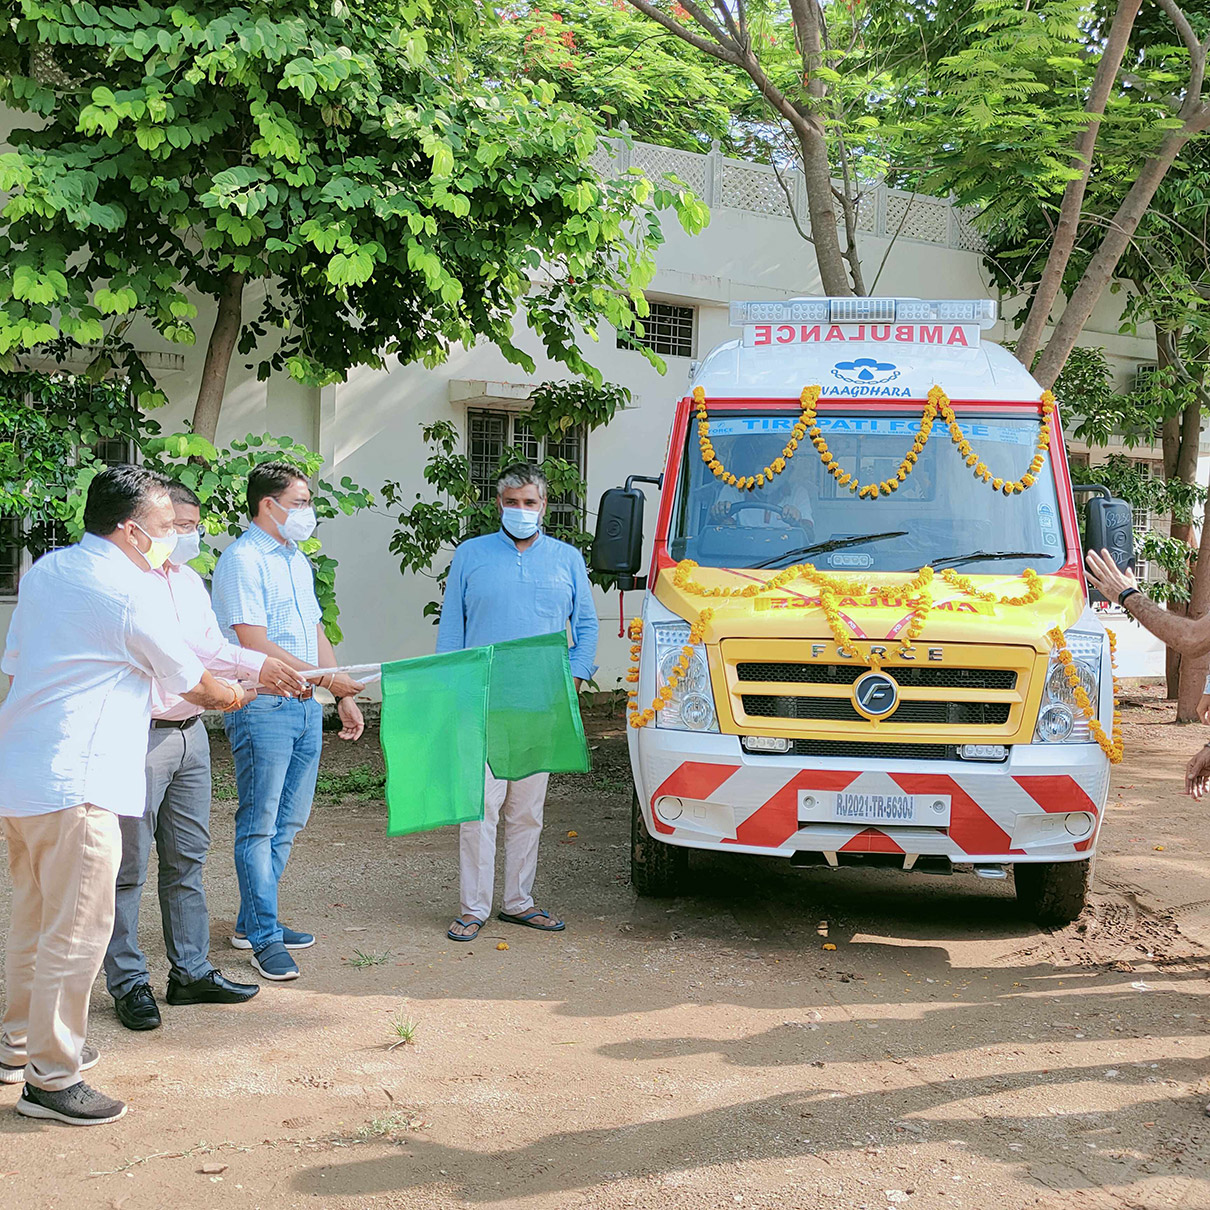 vaagdhara-ambulance-service-for-community-1